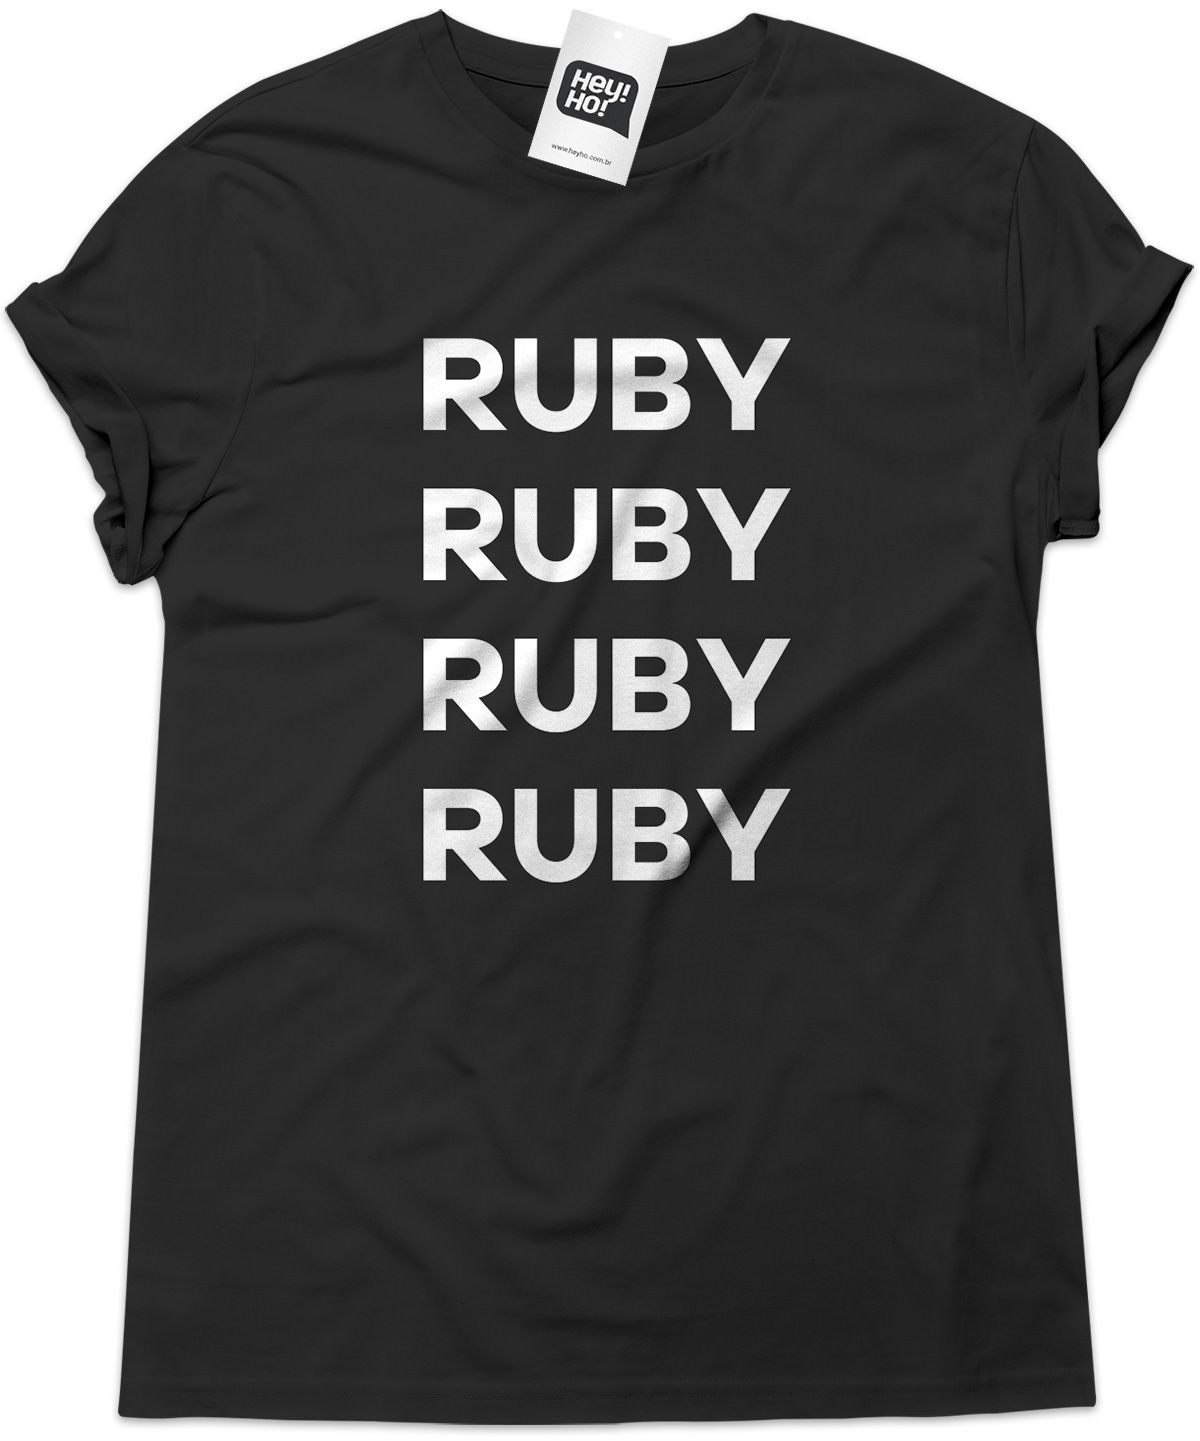 KAISER CHIEFS - Ruby Ruby Ruby Ruby